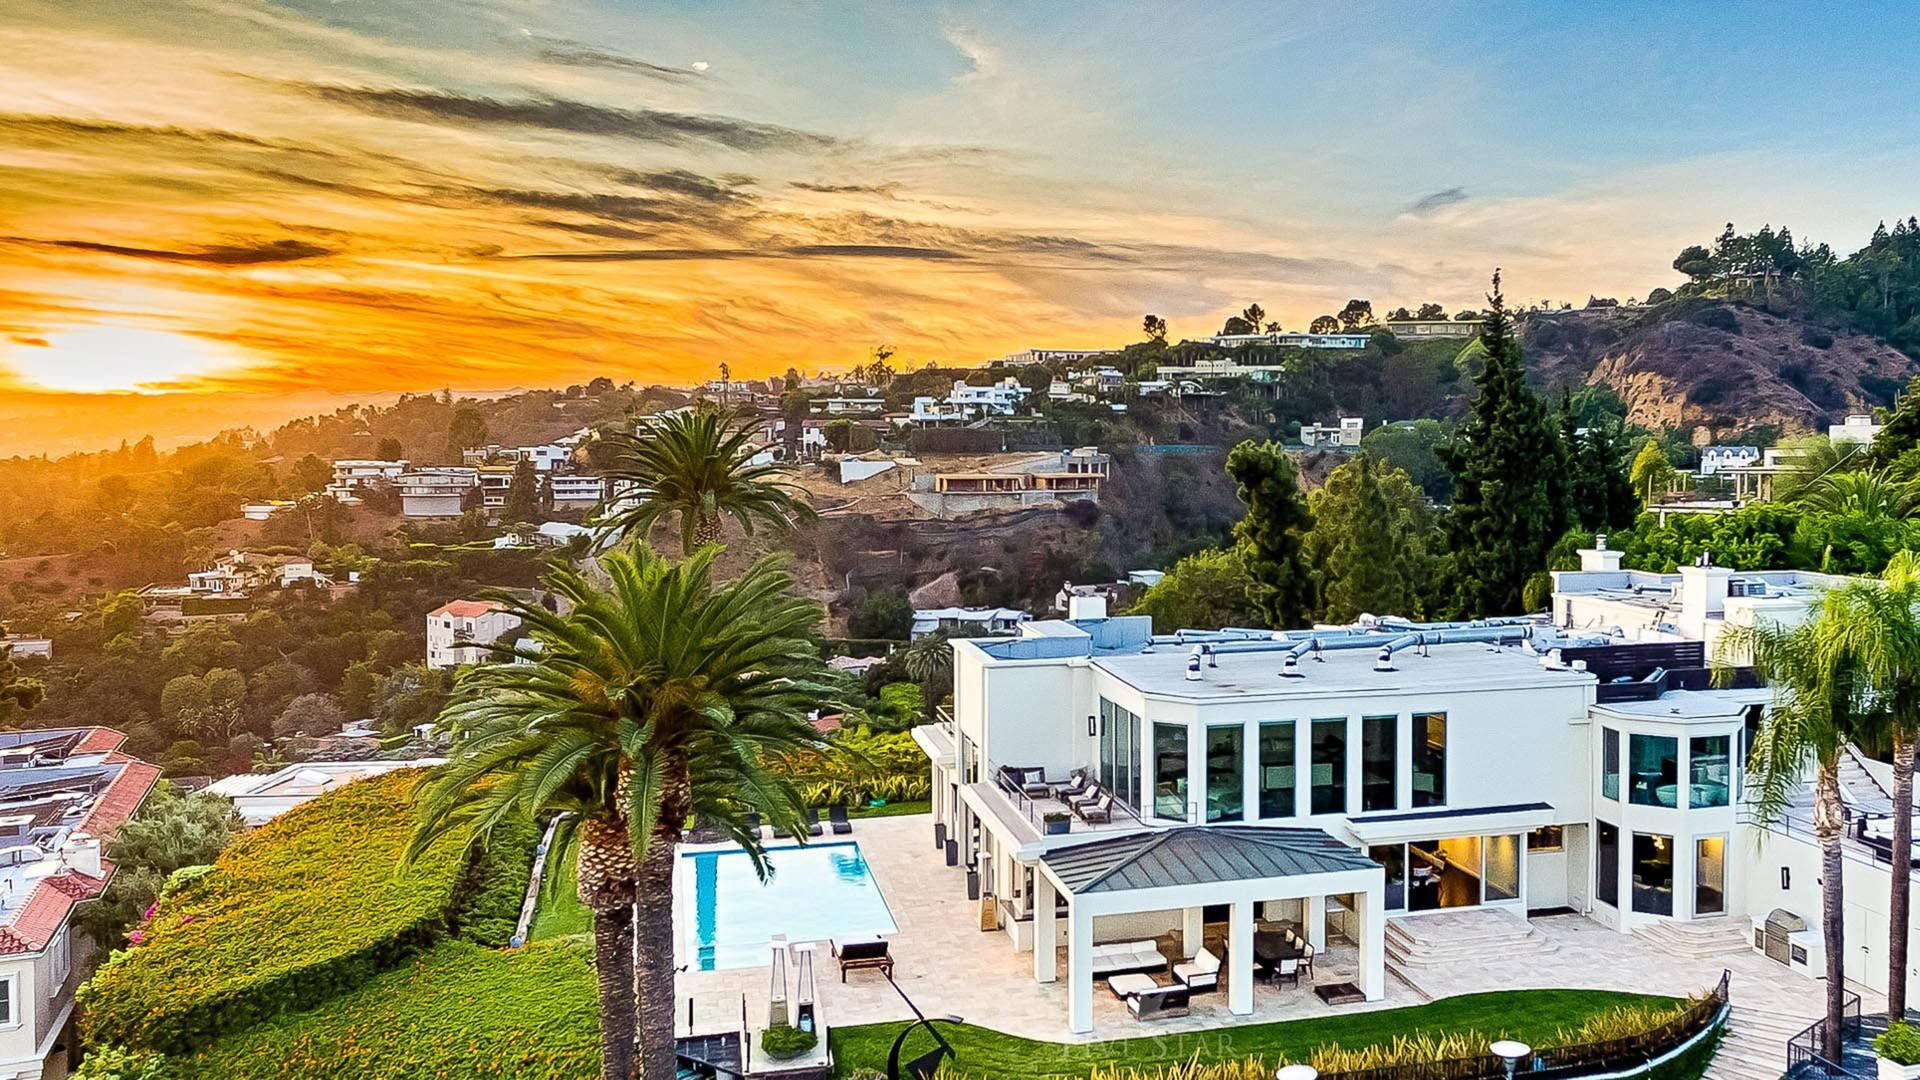 Beverly Hills Los Angeles Sunset Wallpaper